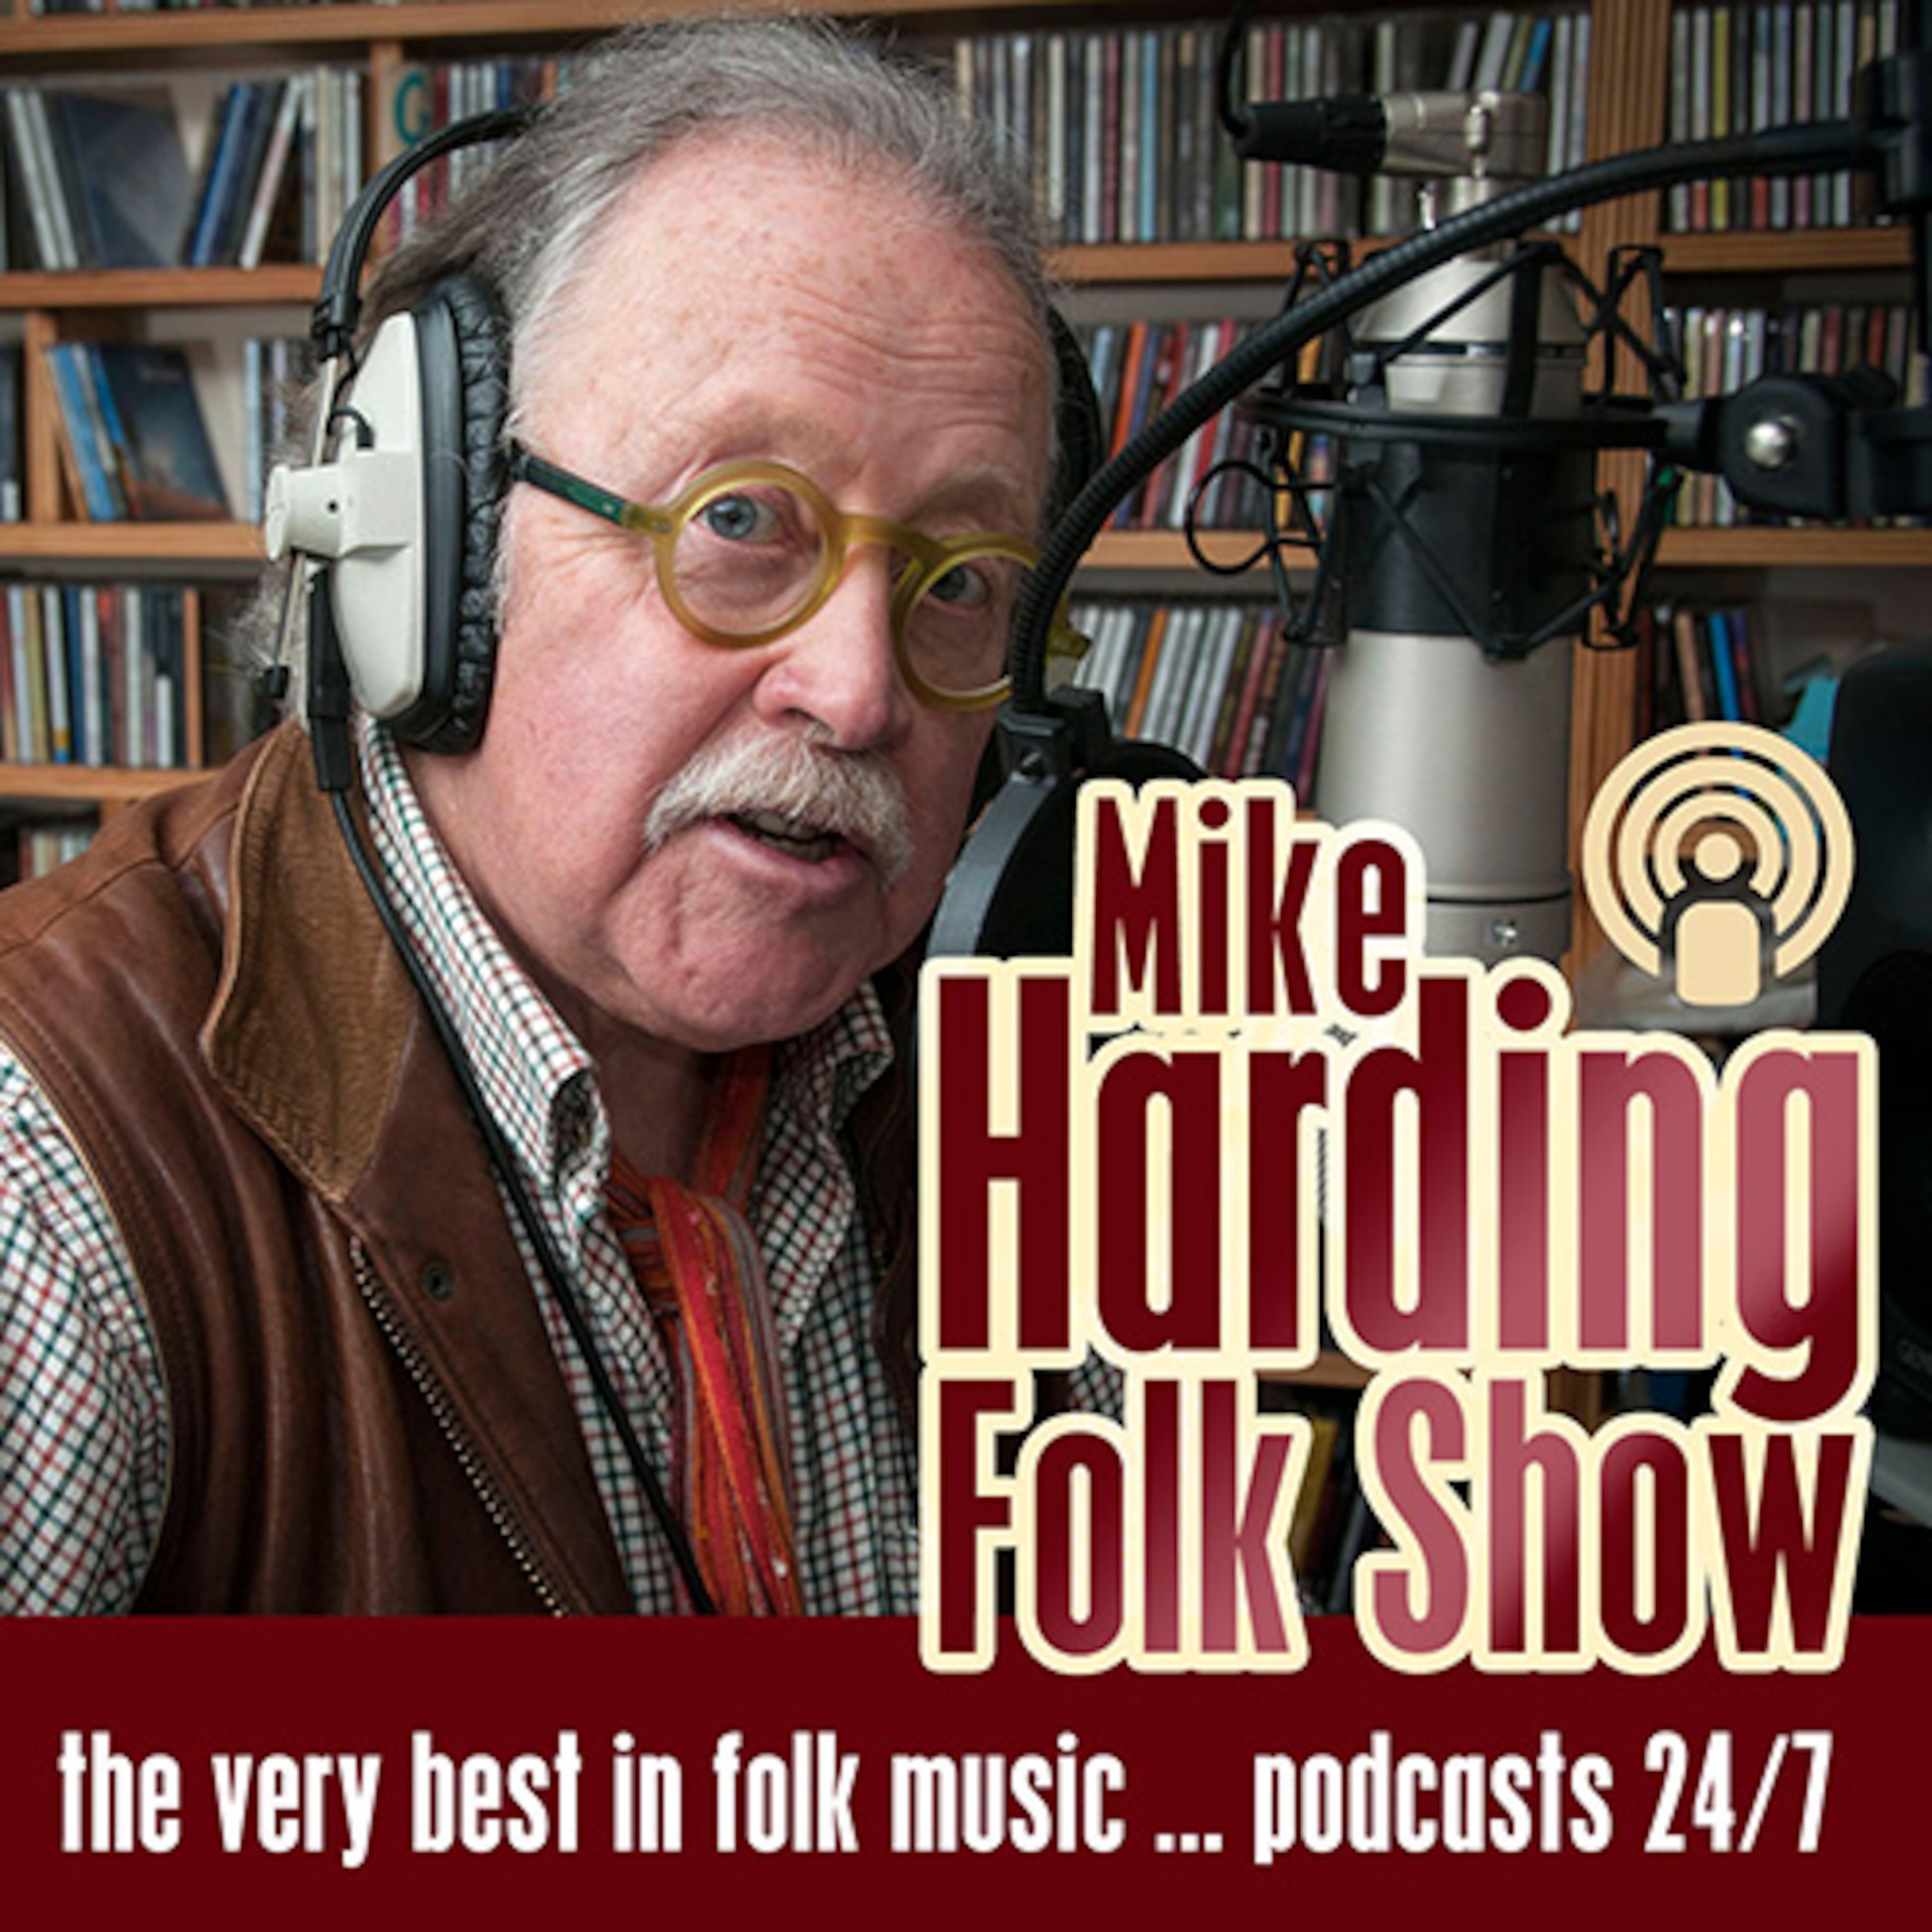 Mike Harding Folk Show 115